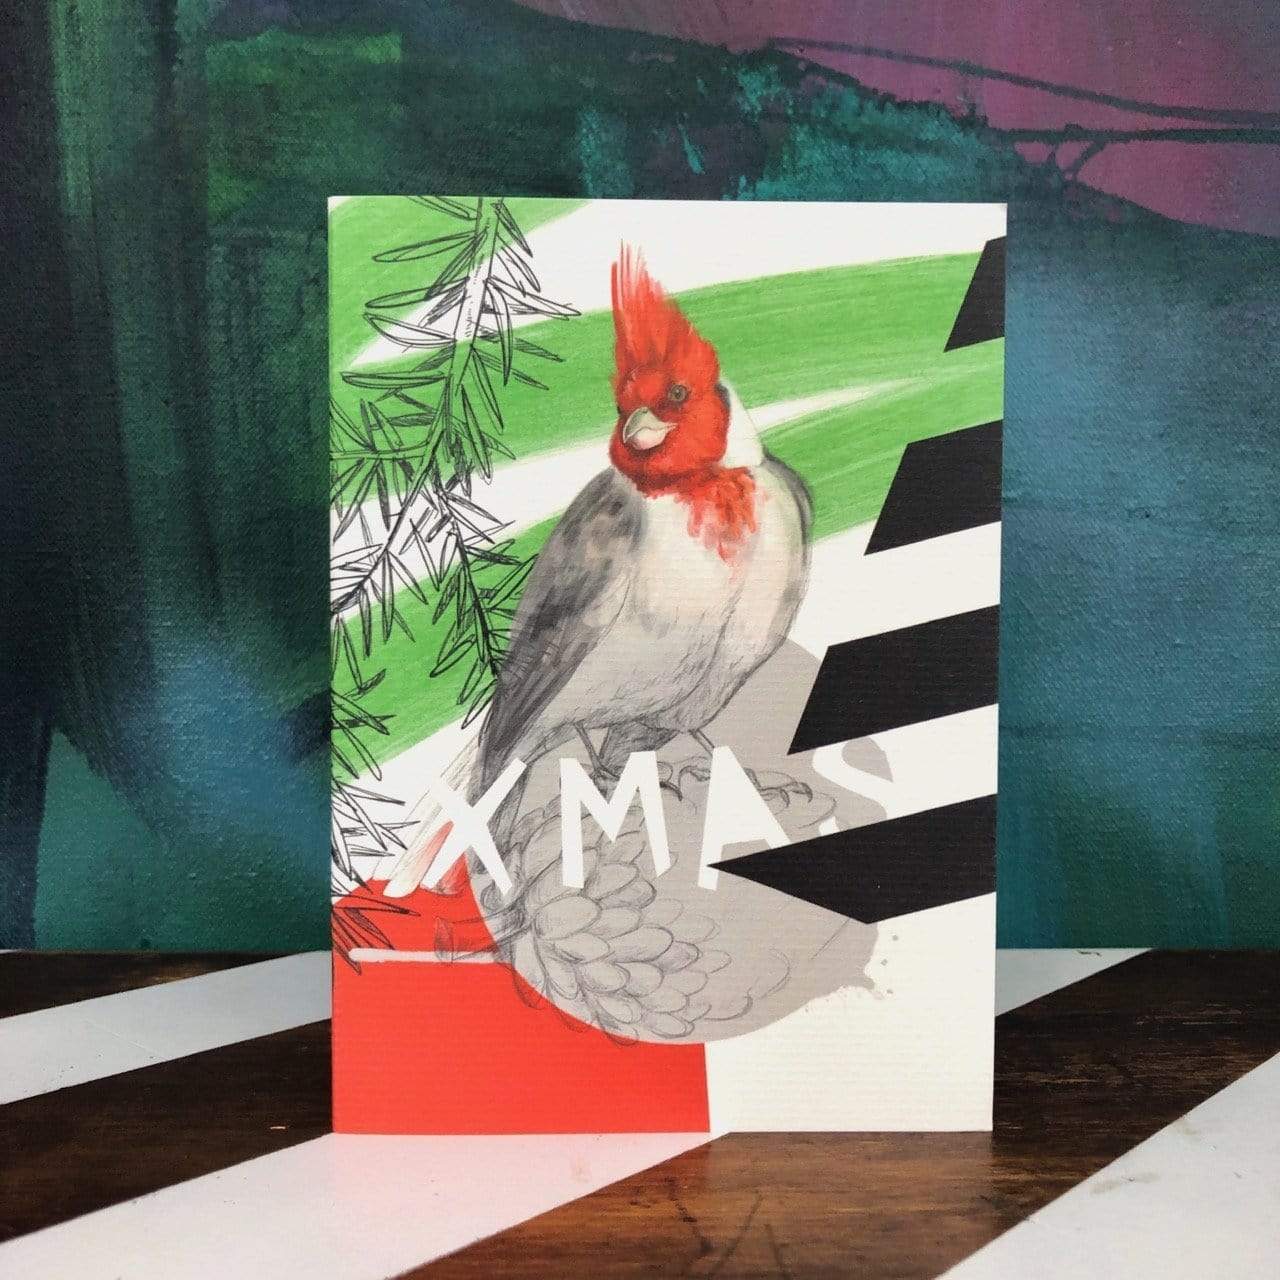 Red-crested cardinal - Xmas Greeting Card